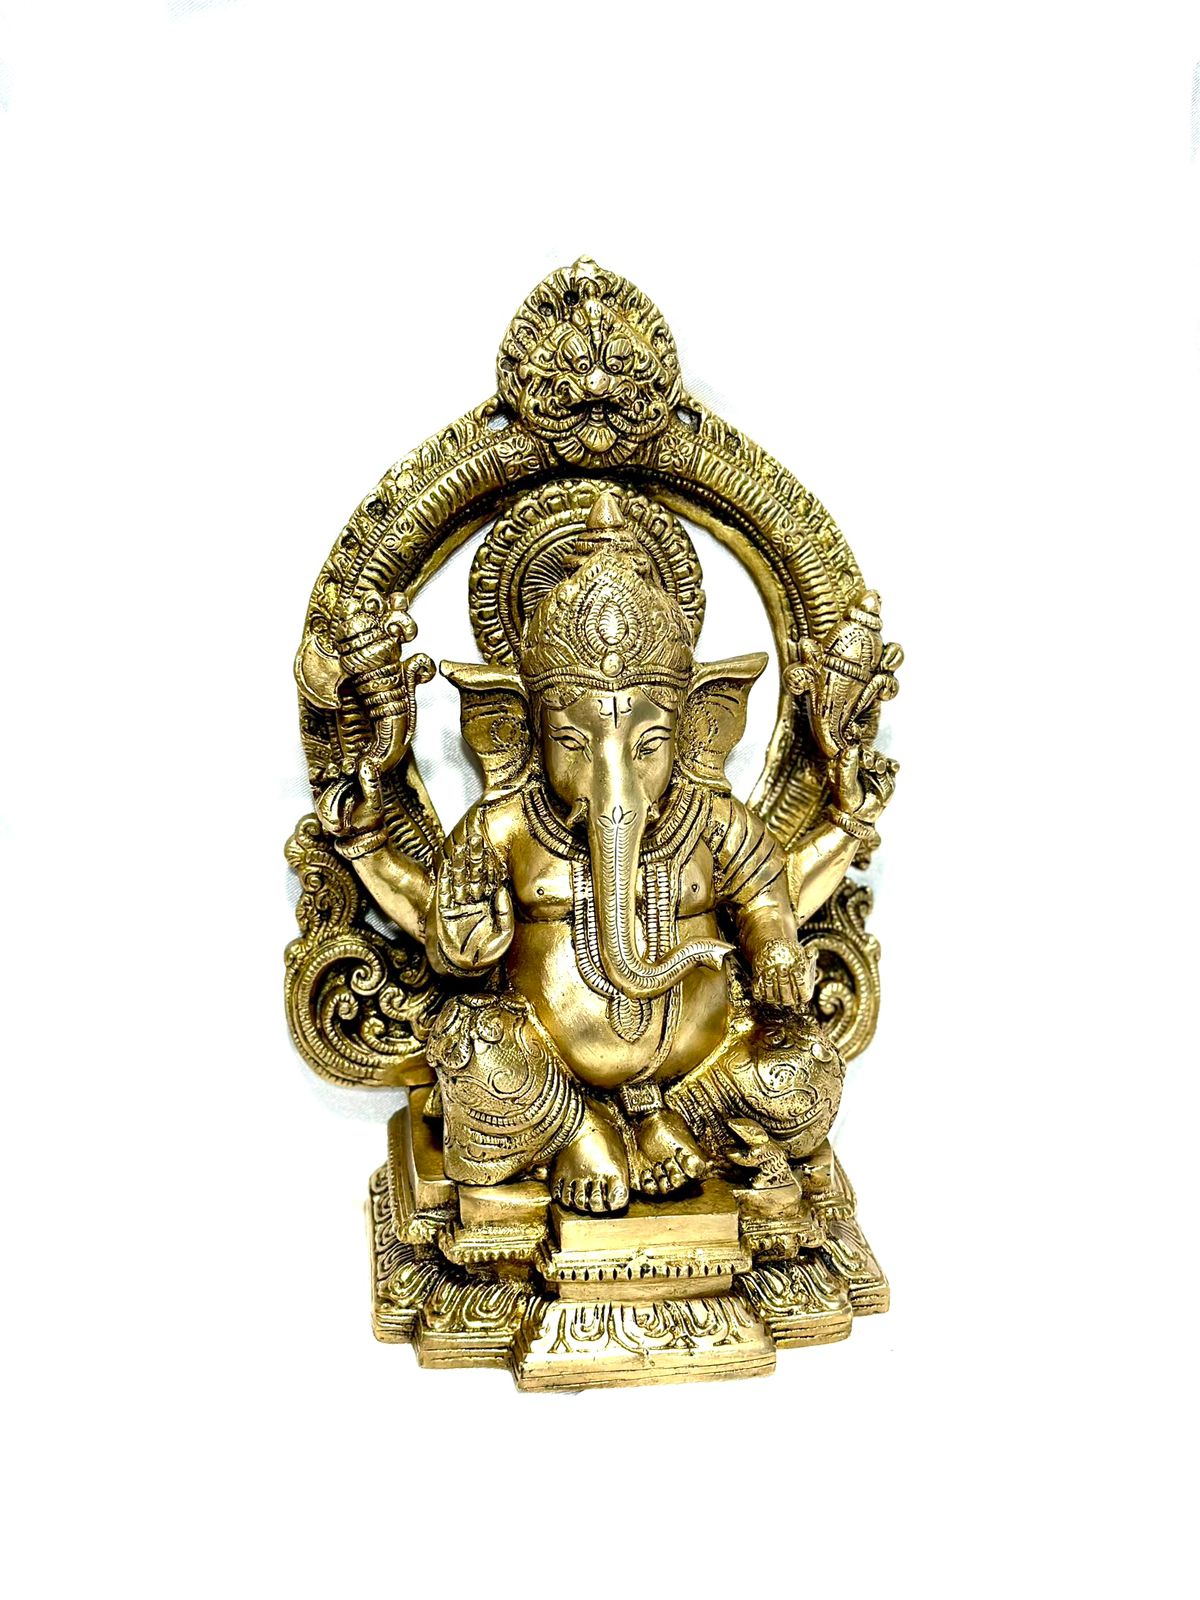 Lord Ganesha Brass Idol Artware Wonderous Craftmanship Religious By Tamrapatra